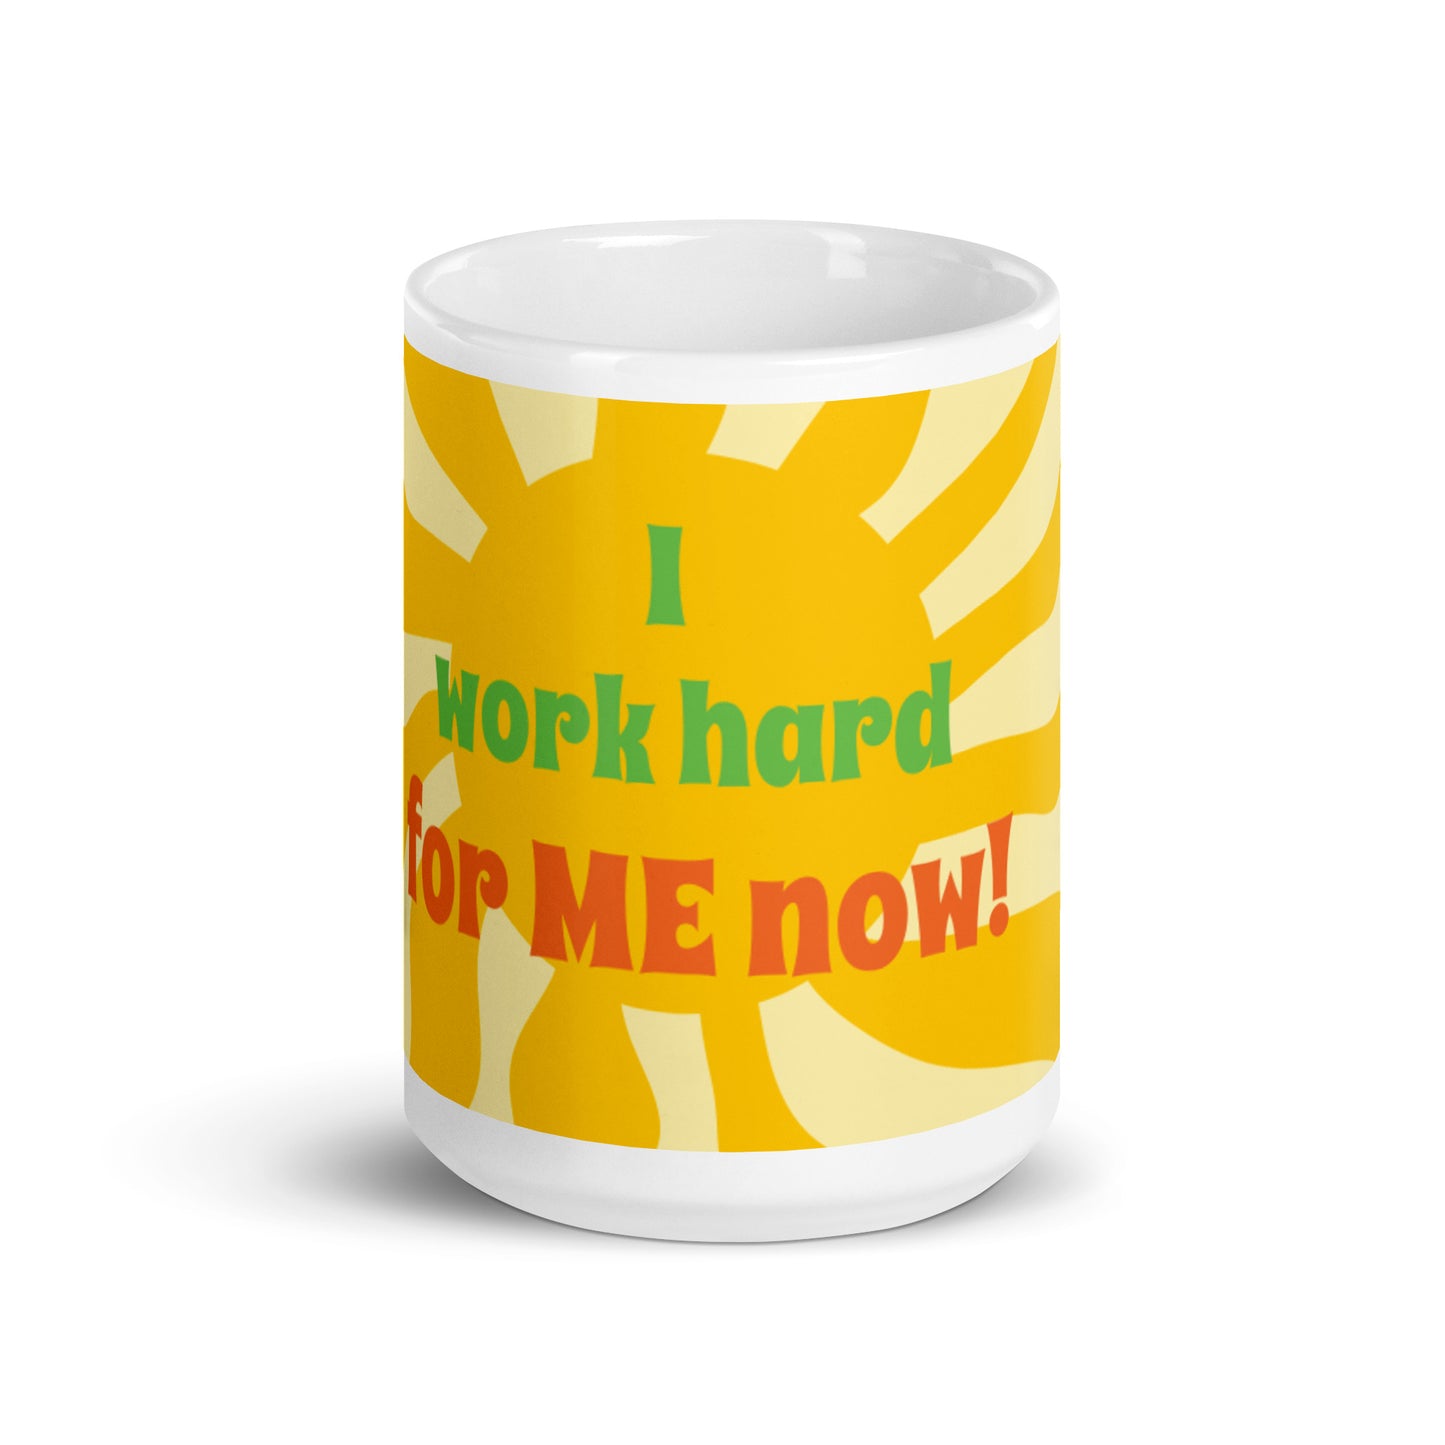 Sunshine White Glossy Mug - I work hard for me now!